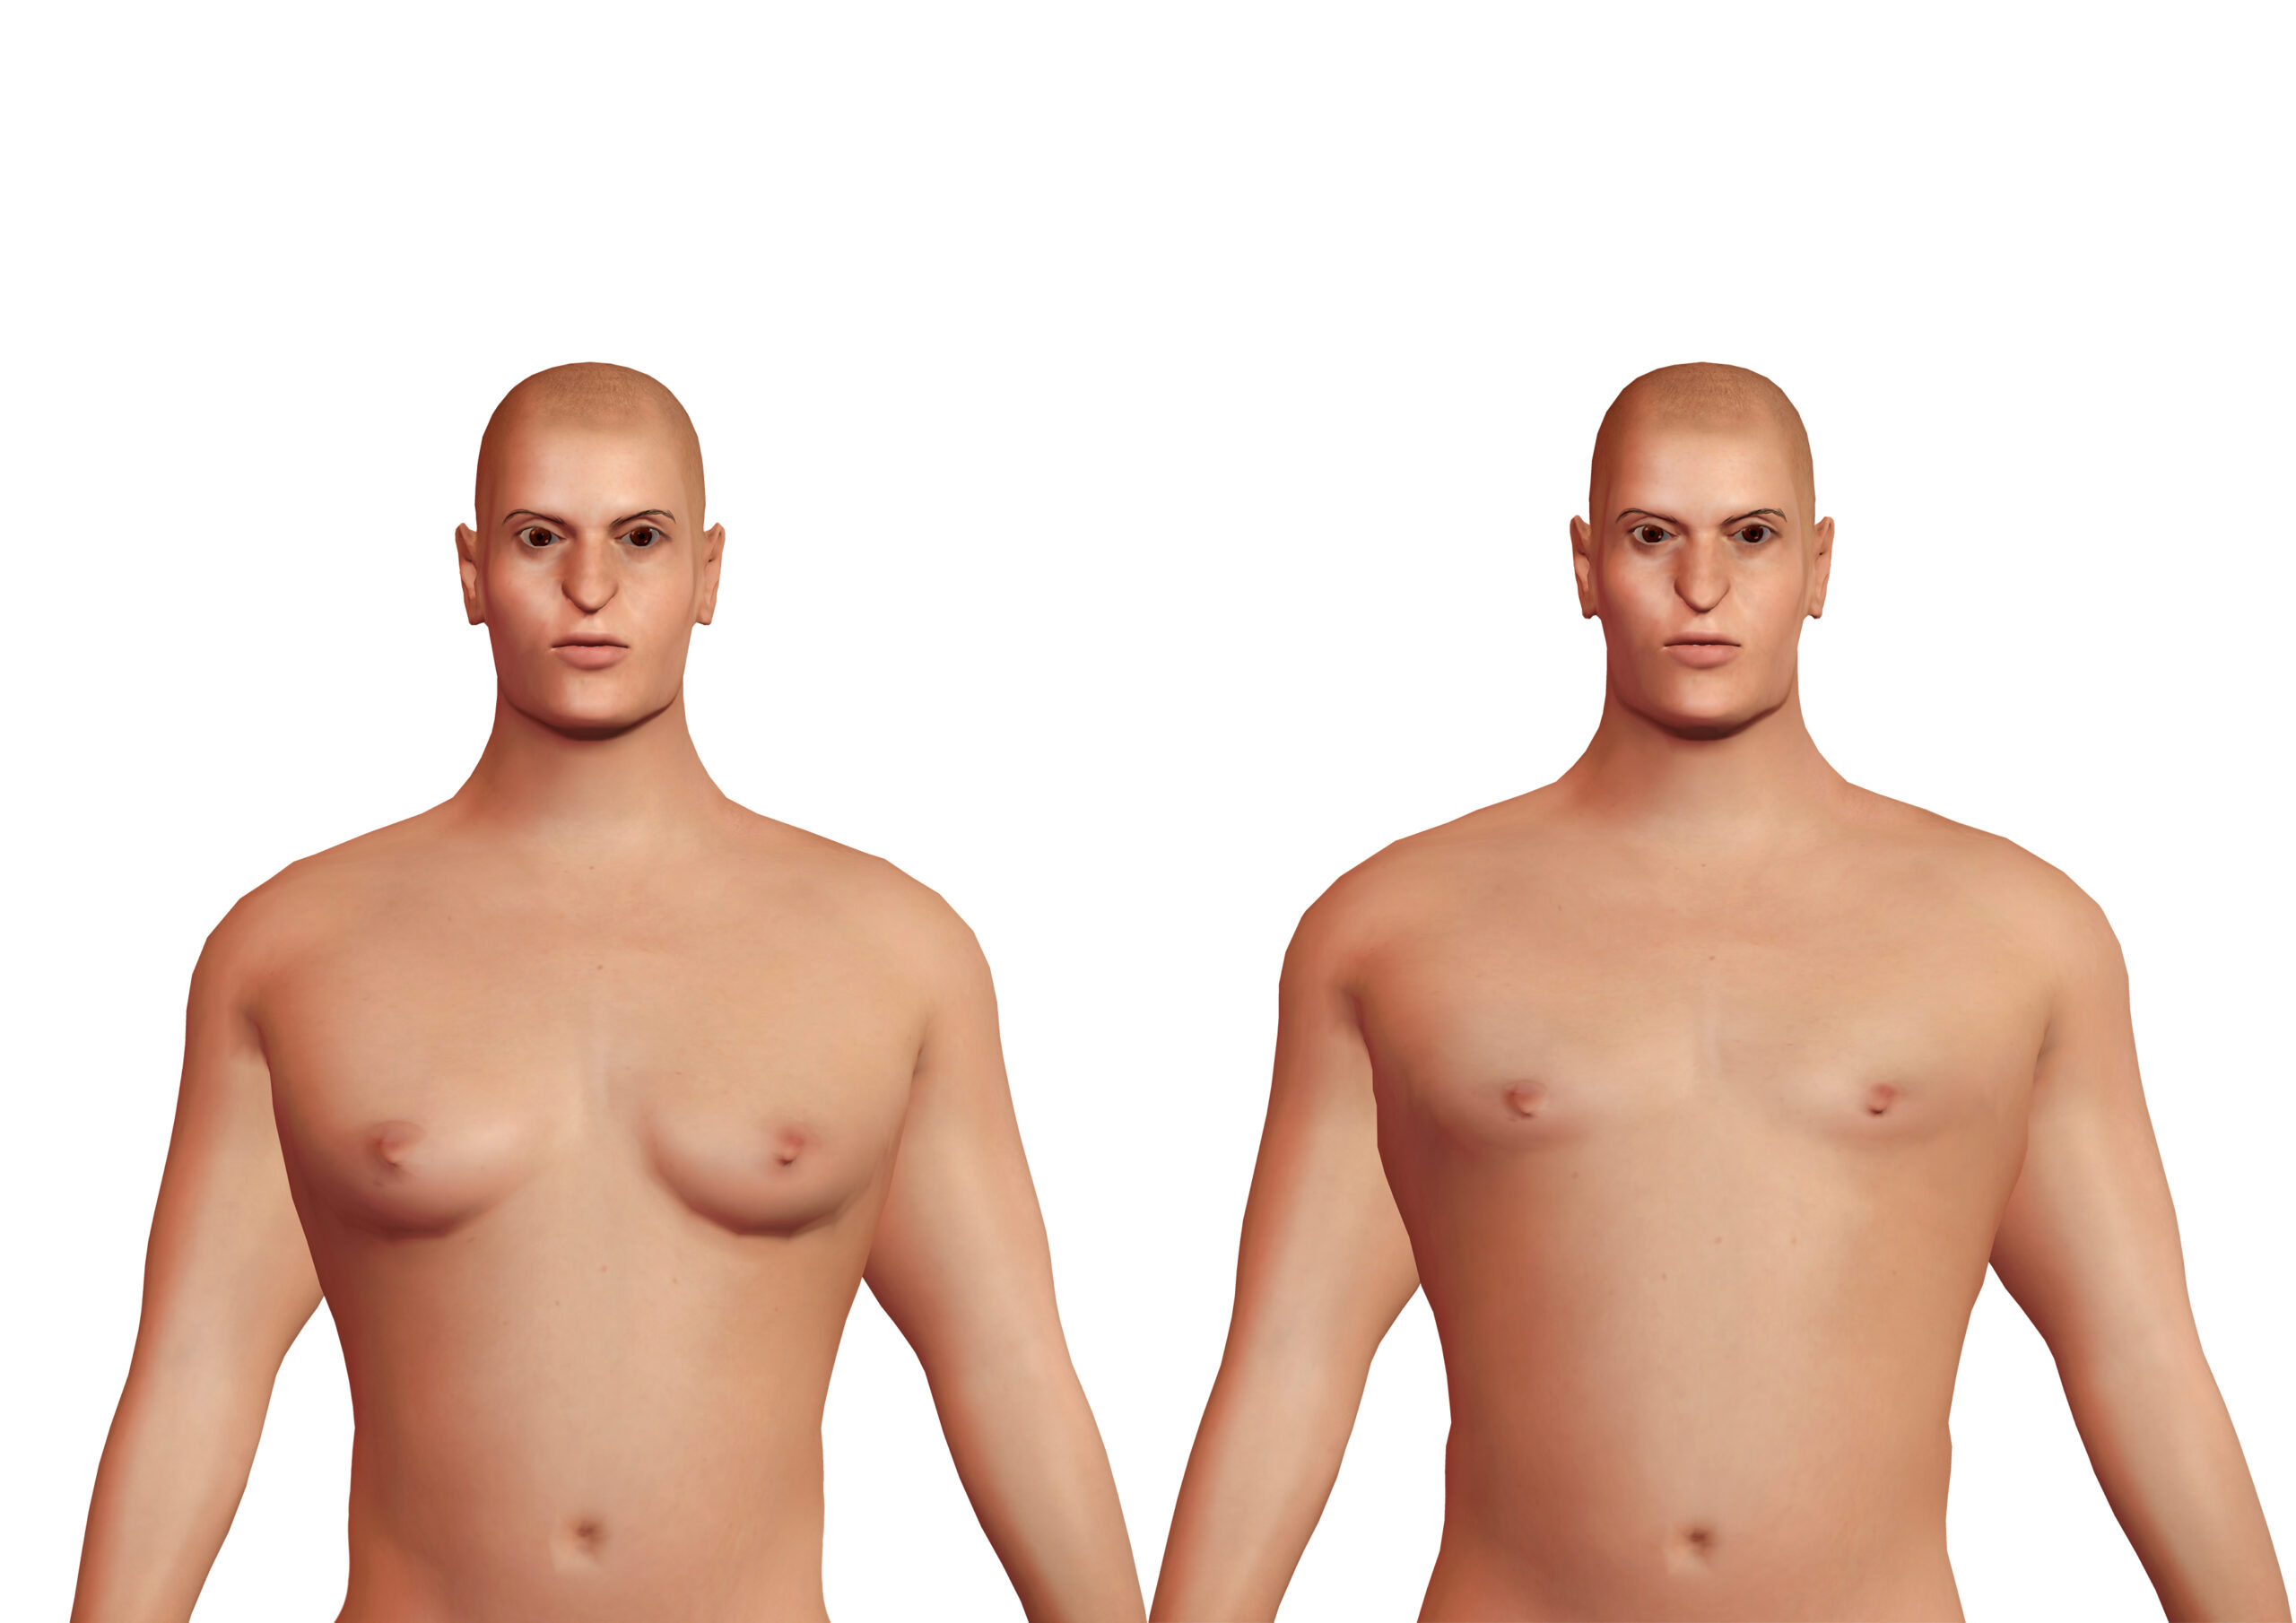 грудь 91 см у мужчин фото 92